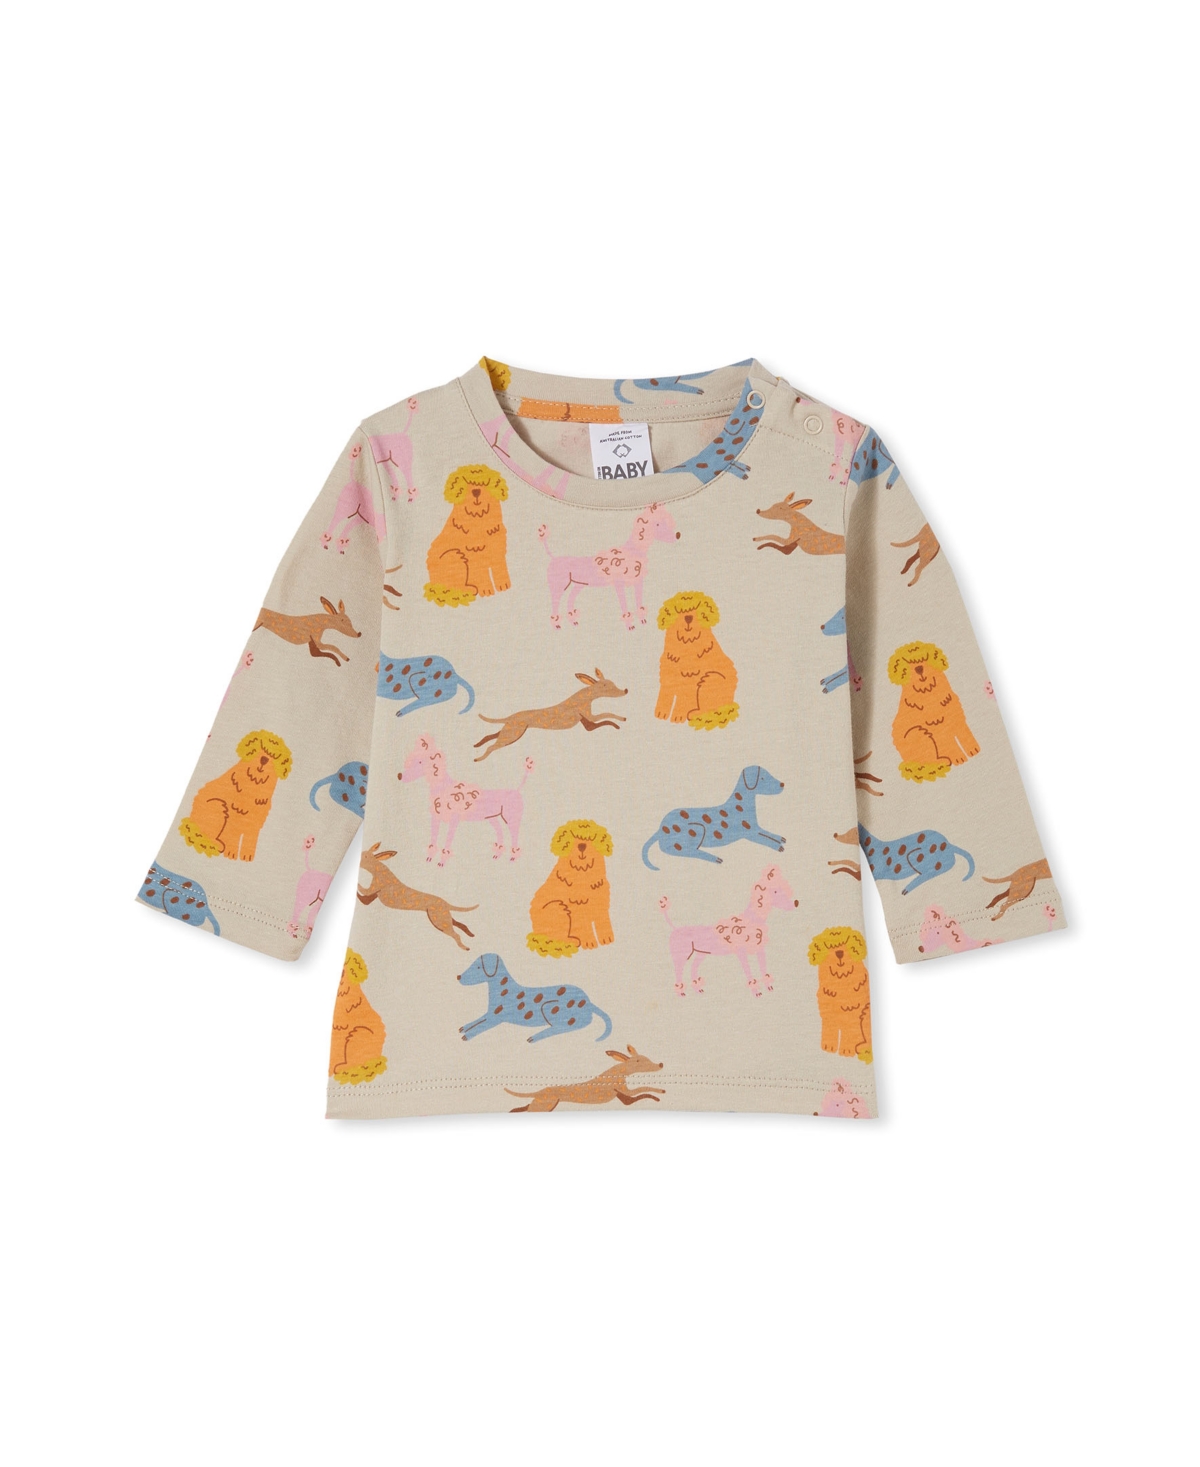 Cotton On Baby Girls Jamie Long Sleeve T-shirt In Rainy Day/scruffy Doggies